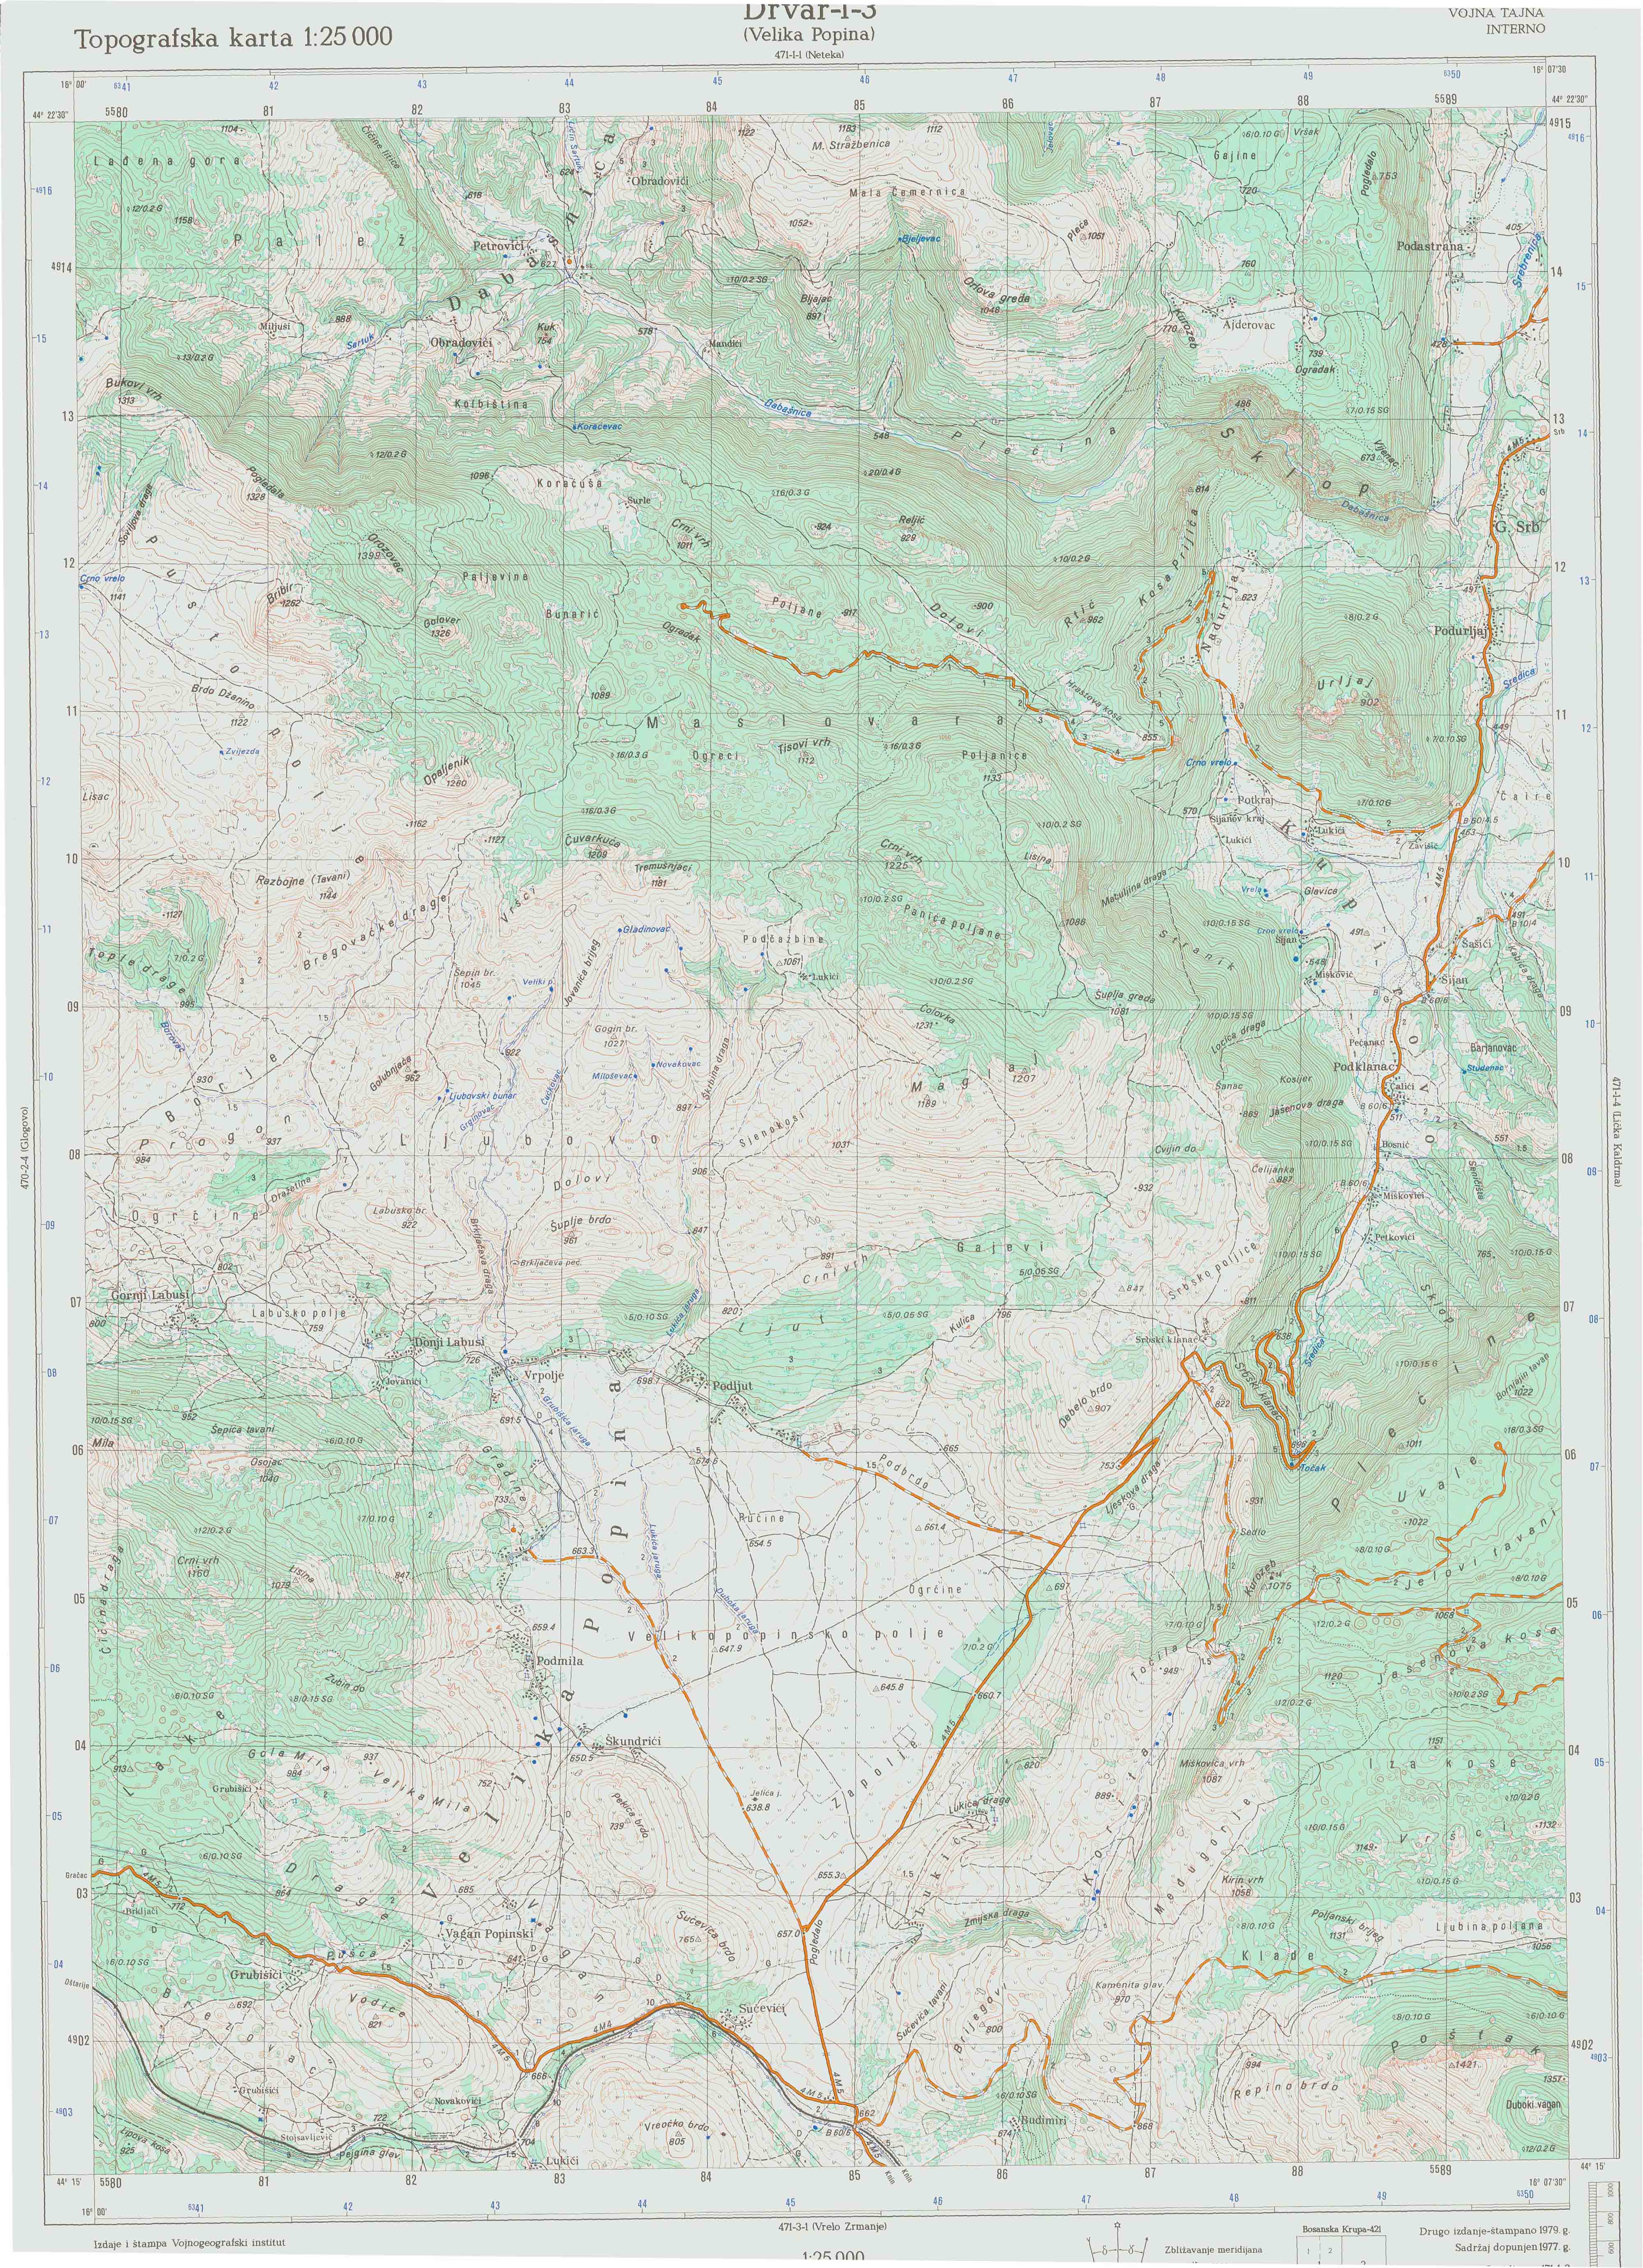  topografska karta BiH 25000 JNA  Drvar